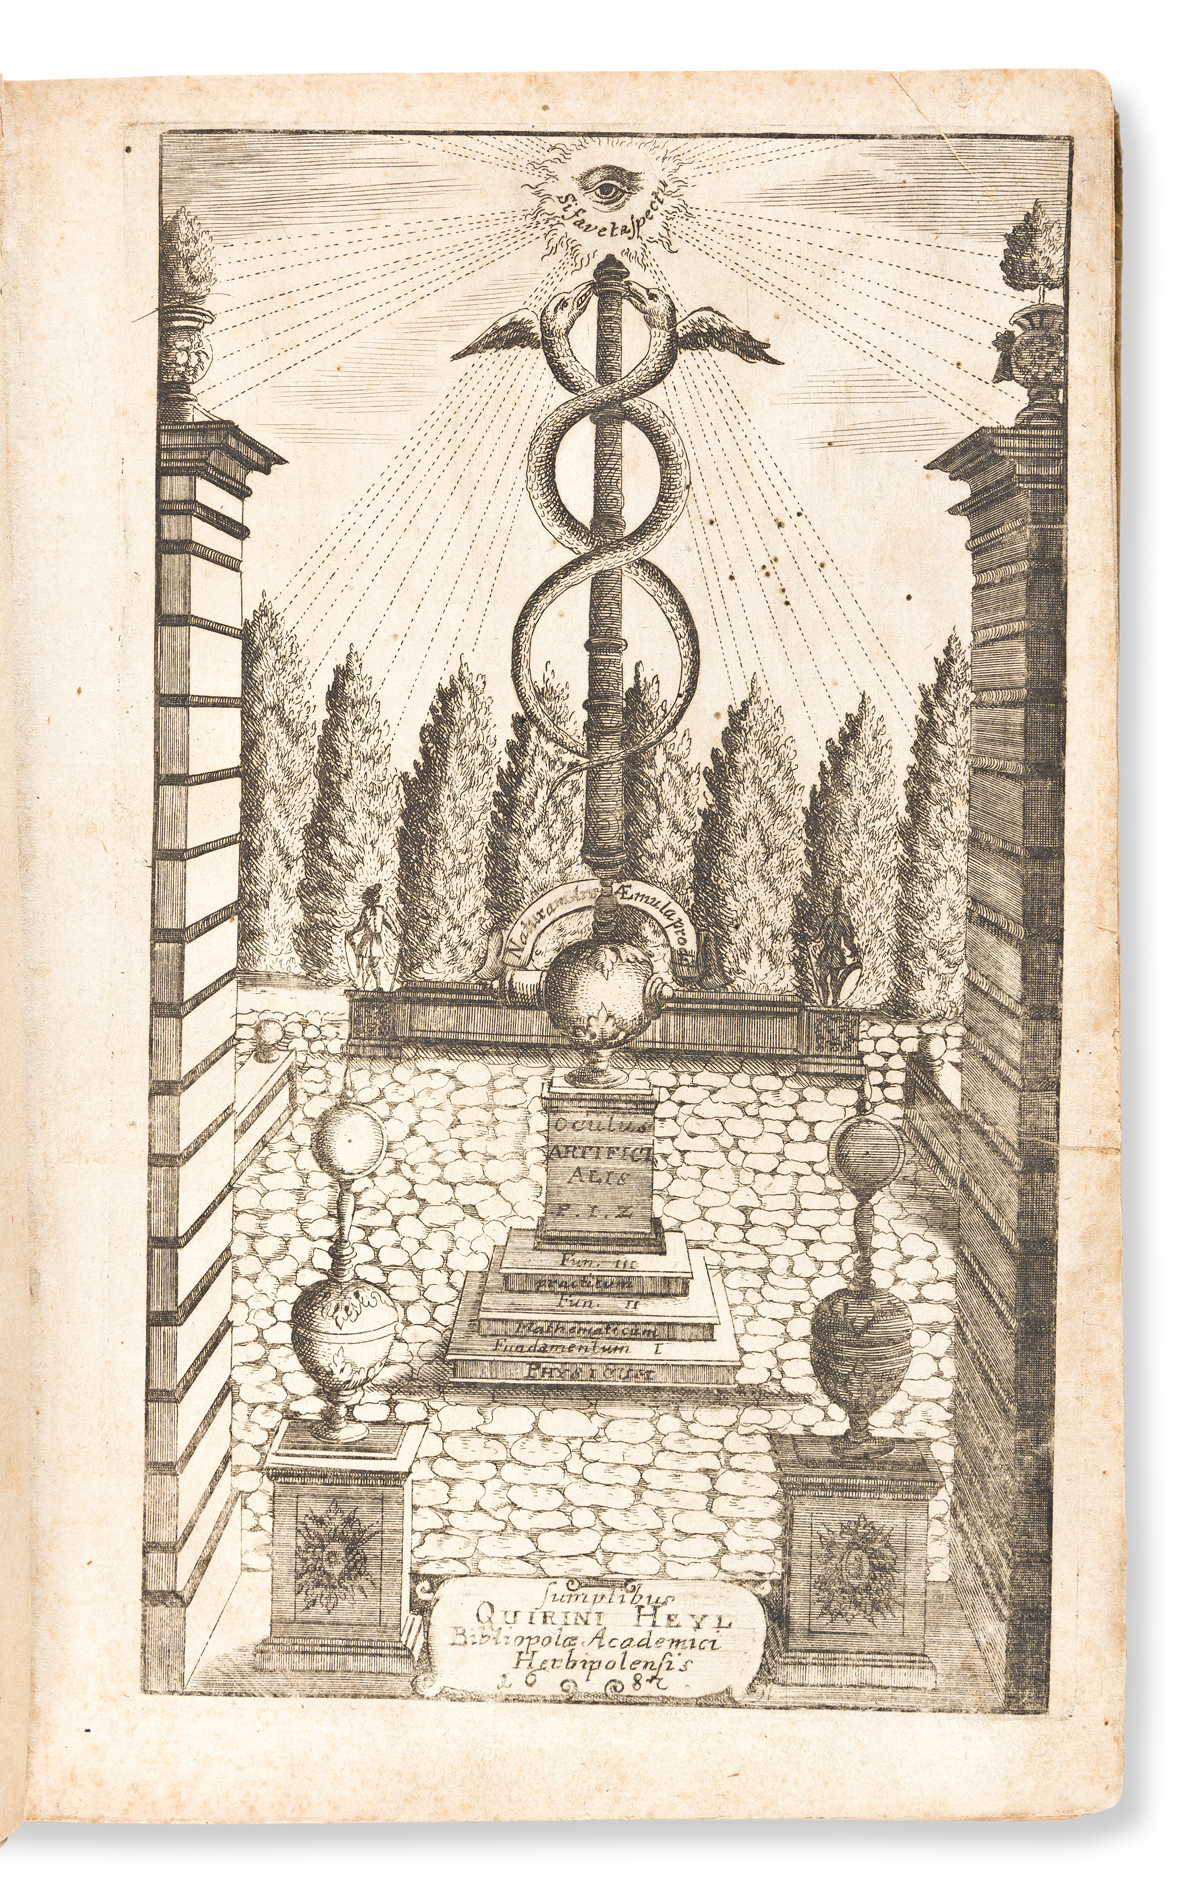 Zahn, Johann (1641-1707) Oculus Artificialis Teledioptricus sive Telescopium.